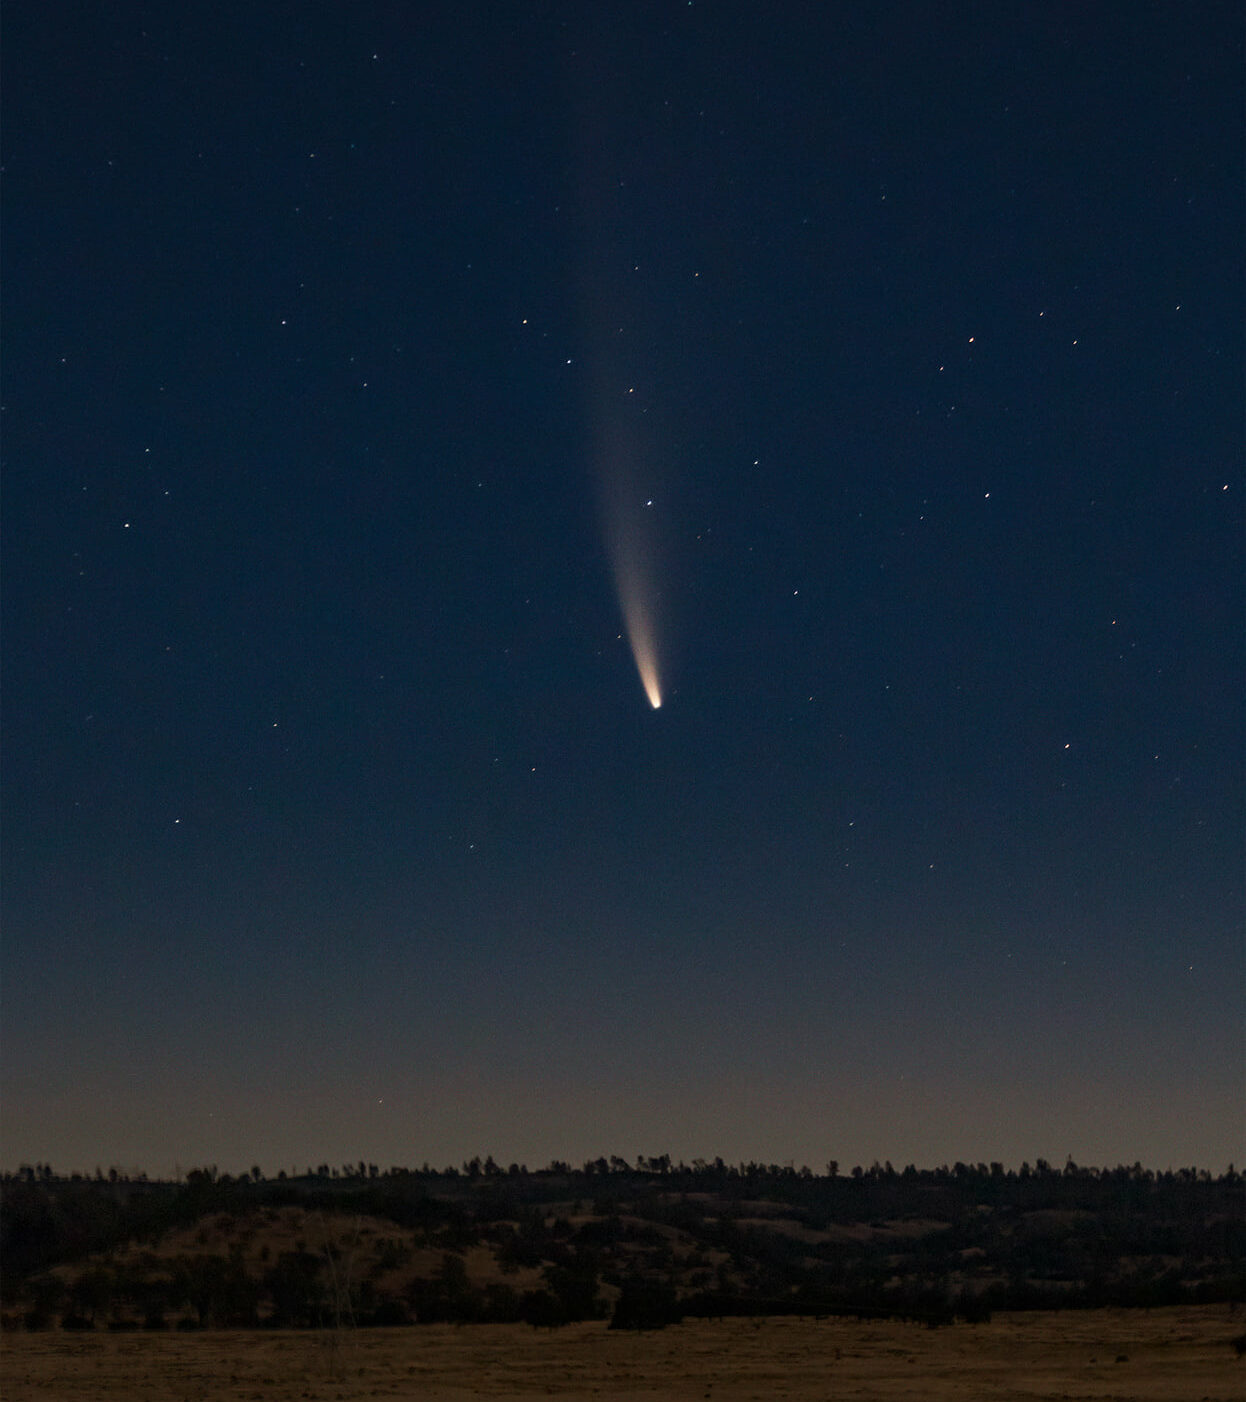 Comet C/2020 F3 (NEOWISE) streaking across the dusk sky over Bidwell Park in 2020